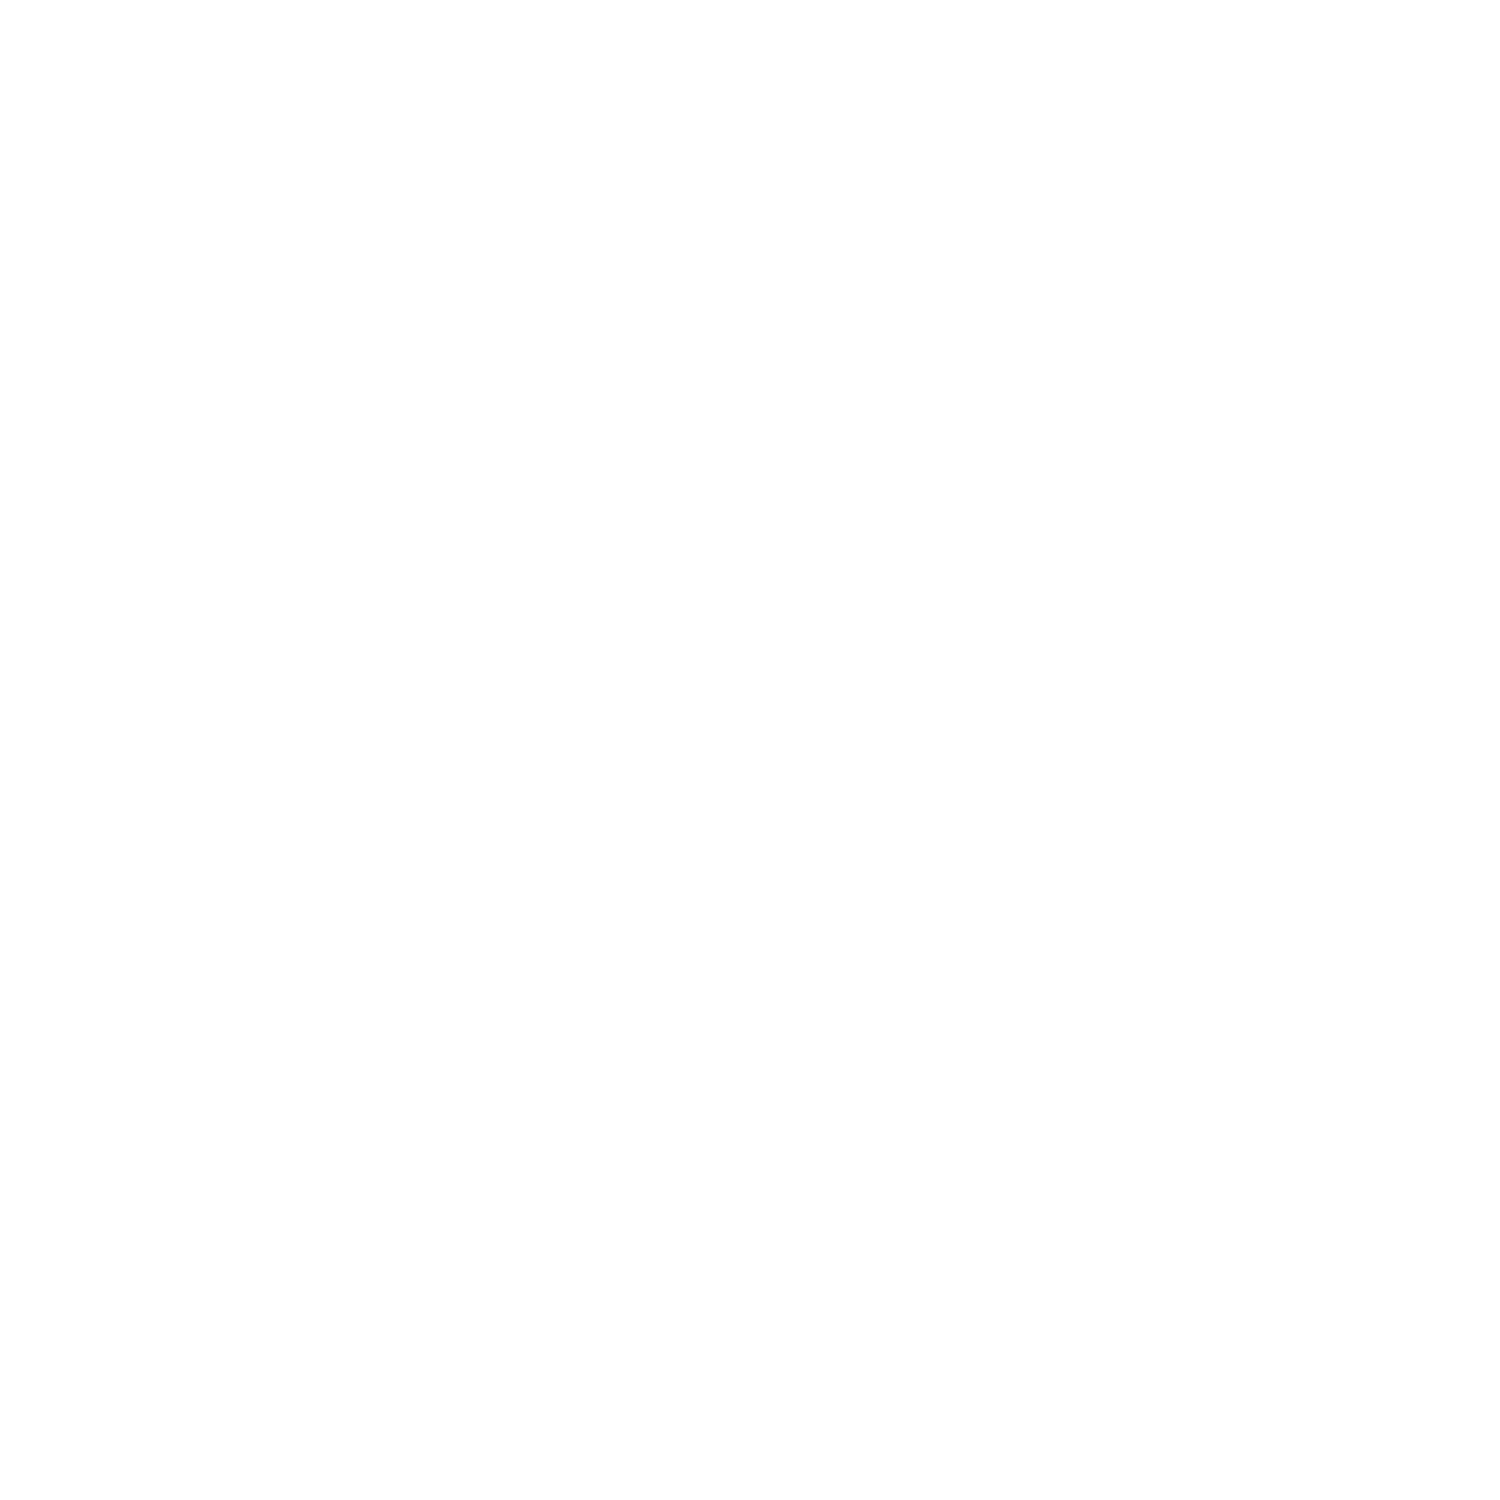 MCITy - Build Better Together